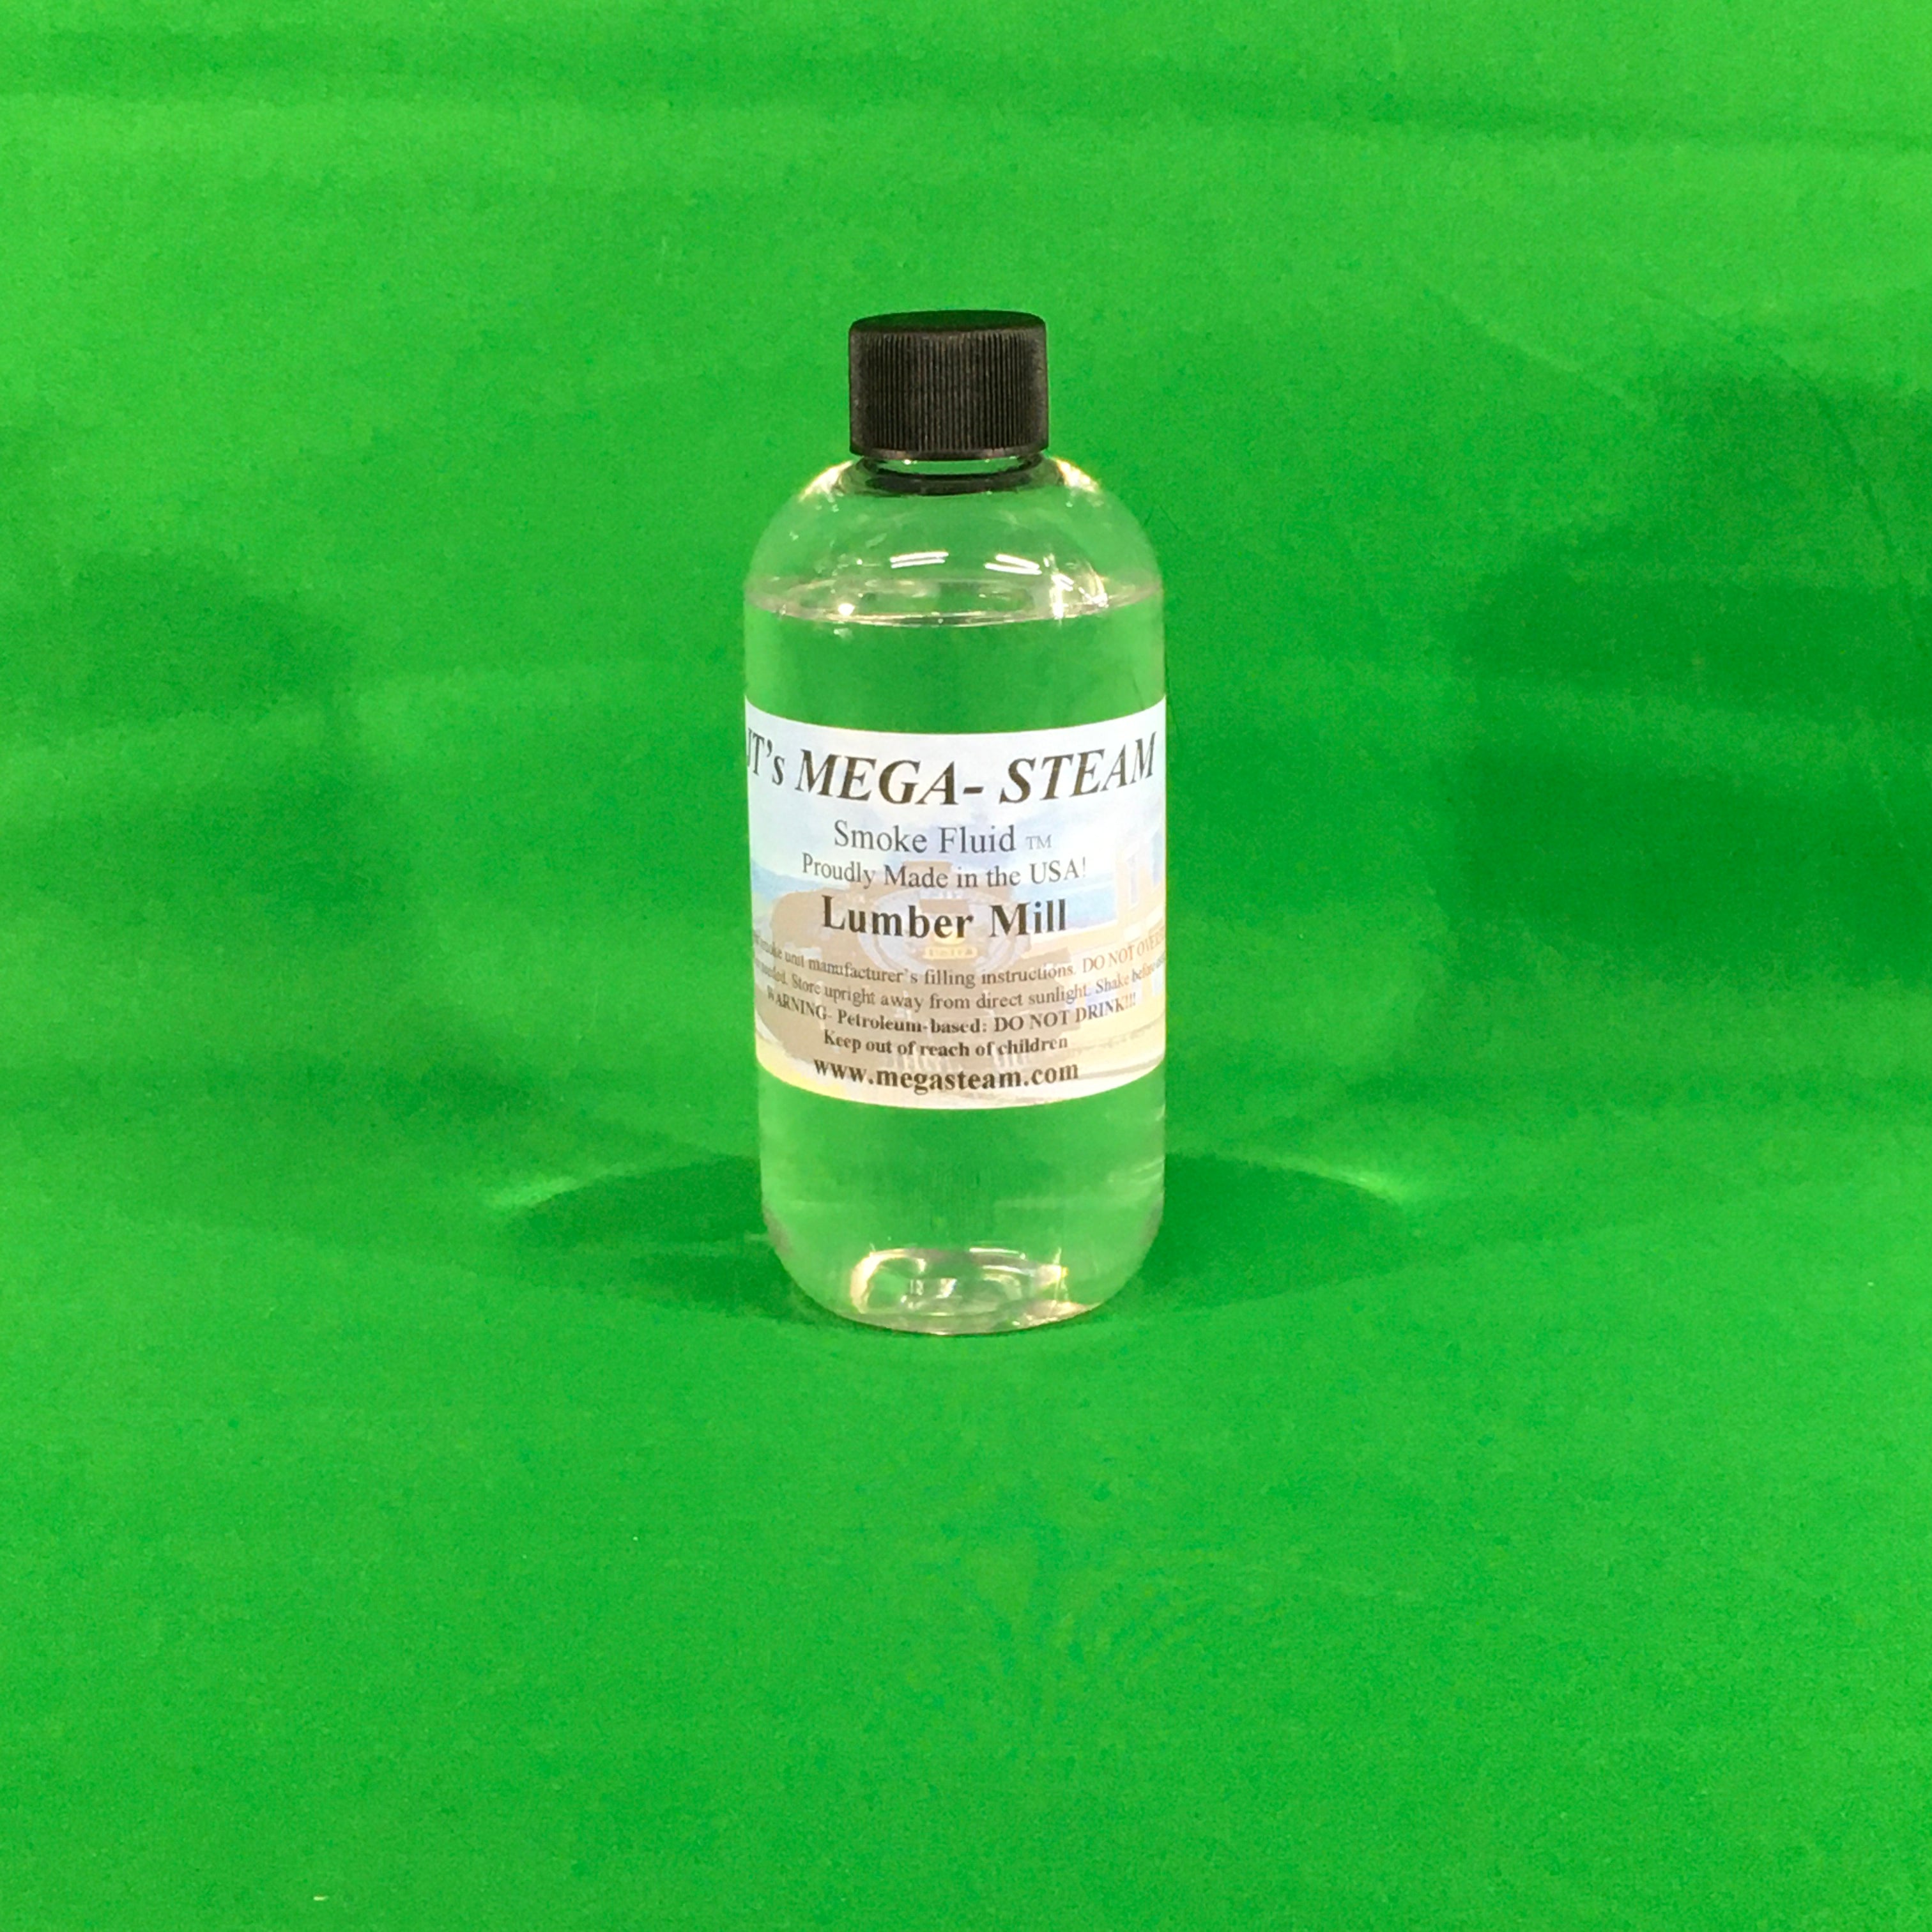 JT's Mega-Steam Smoke Fluid - Environment Scents - 8 Oz Refill Bottle